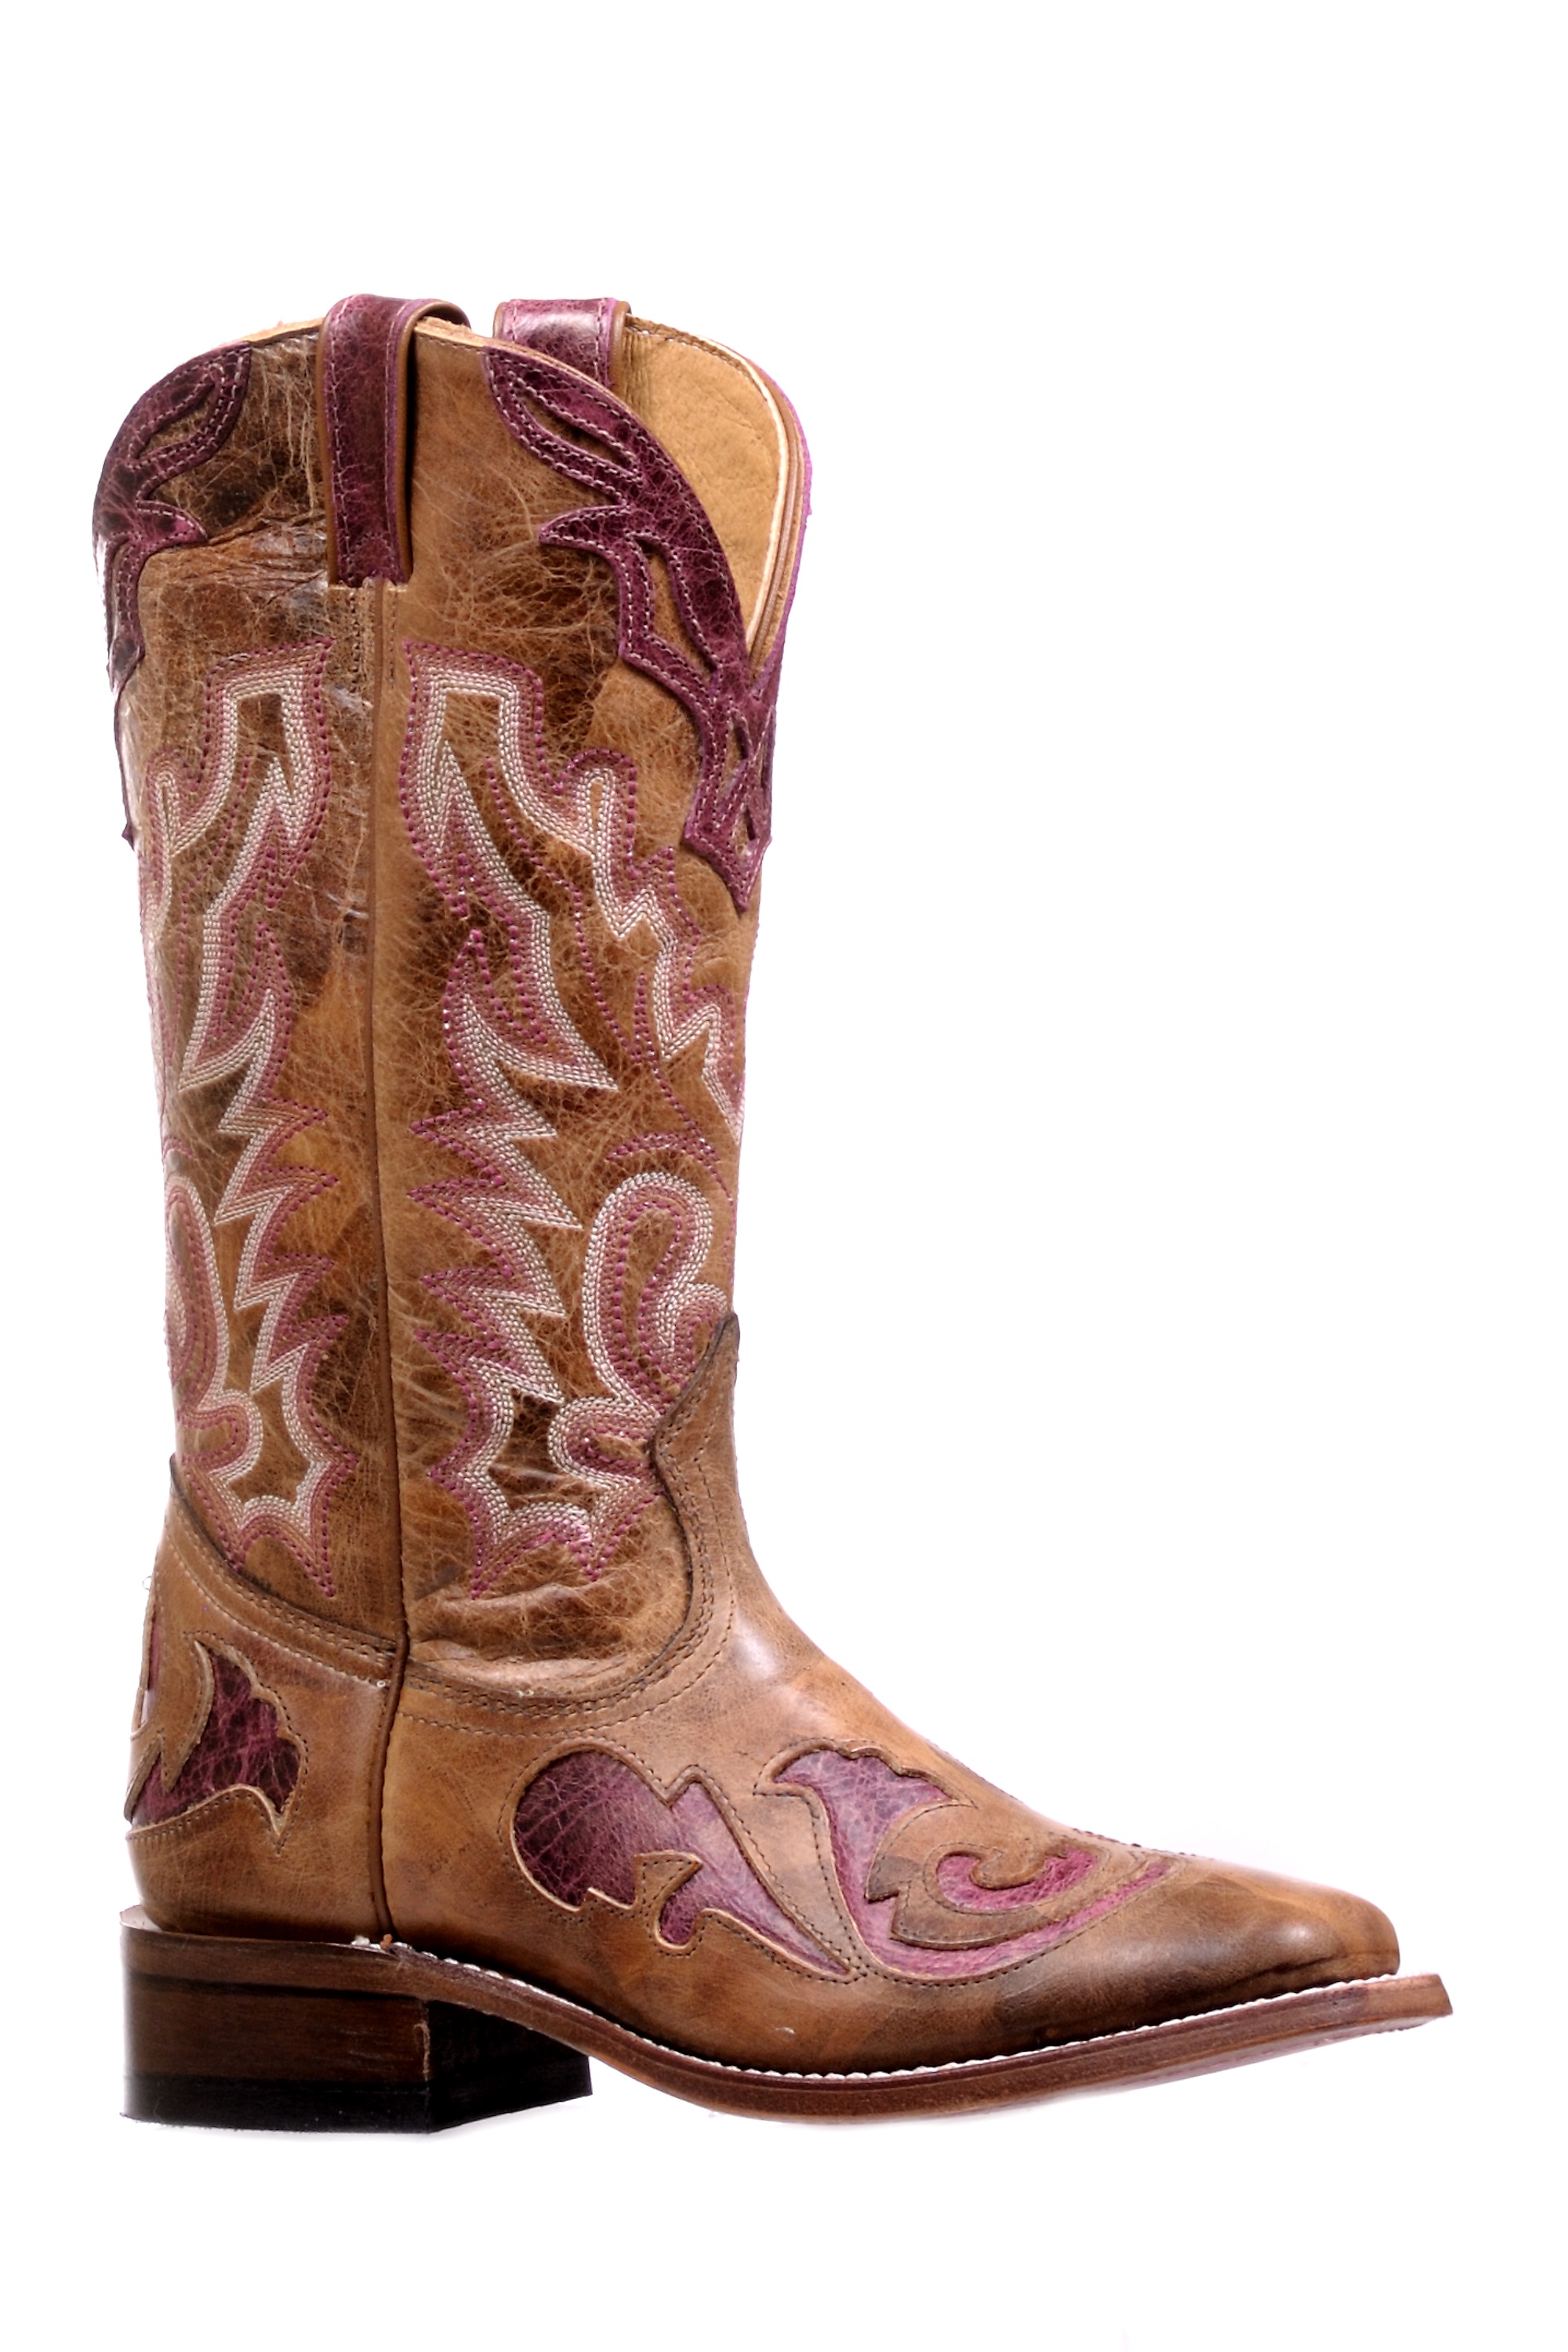 boulet boots cowboy boots, ladiesu0027, wide square toe ODRKVLV